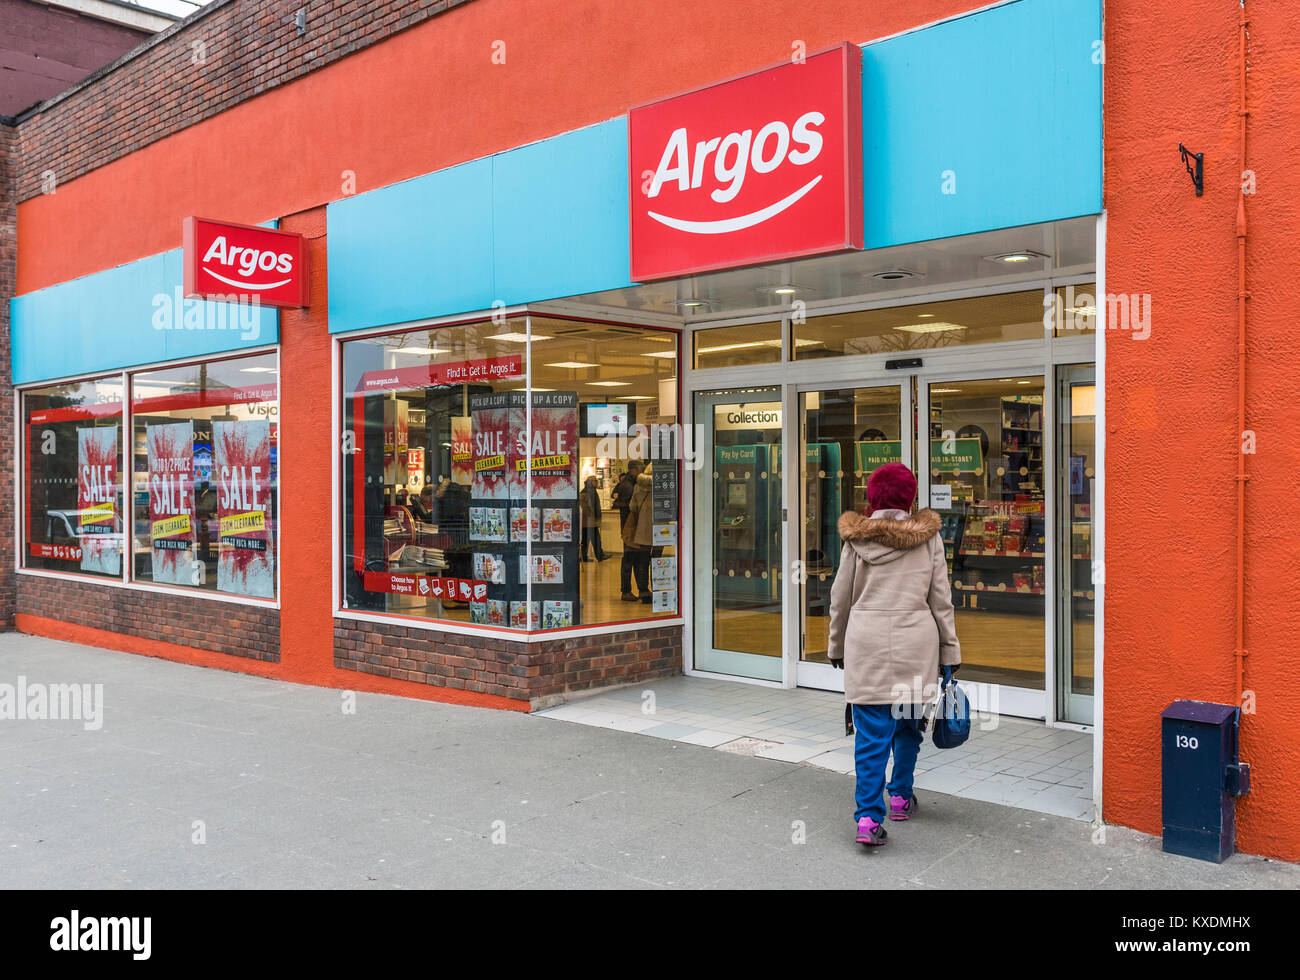 Argos shop front entrance in Horsham, West Sussex, England, UK. Stock Photo